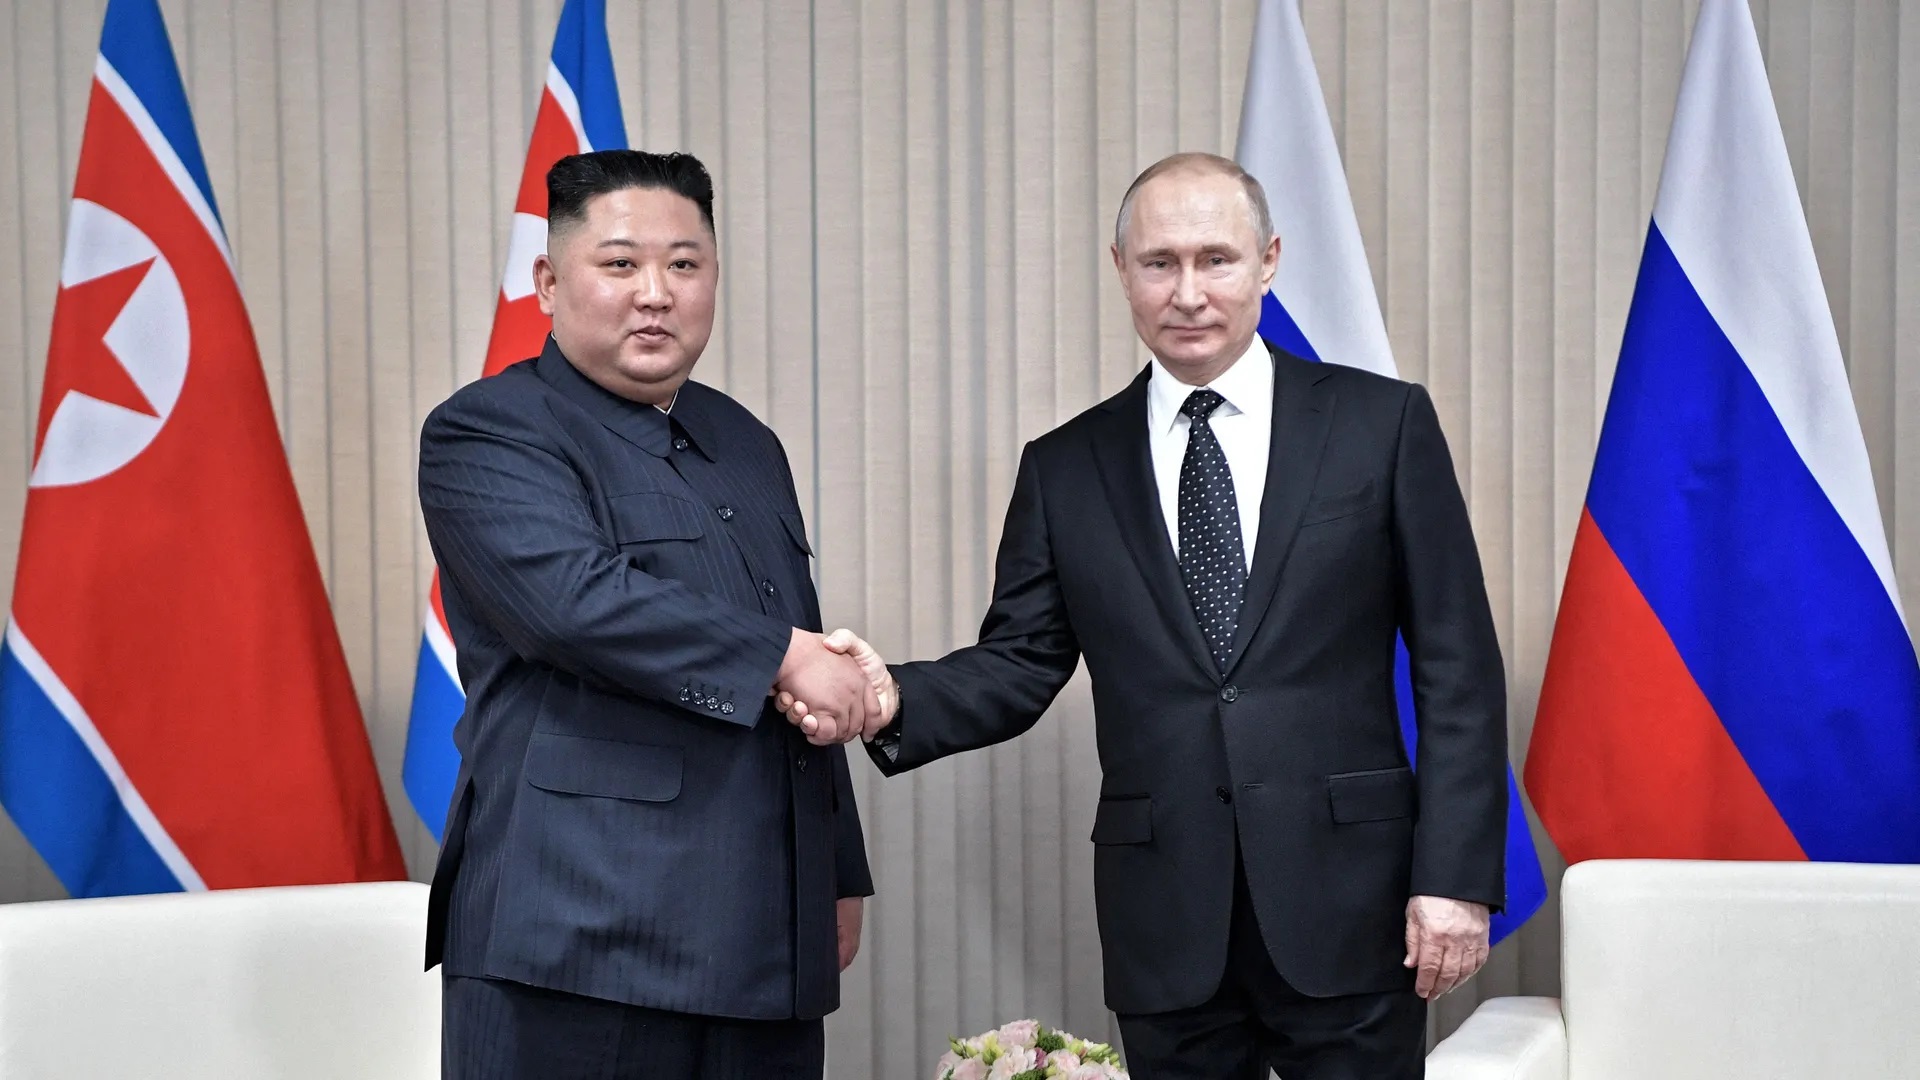 Kin and Putin